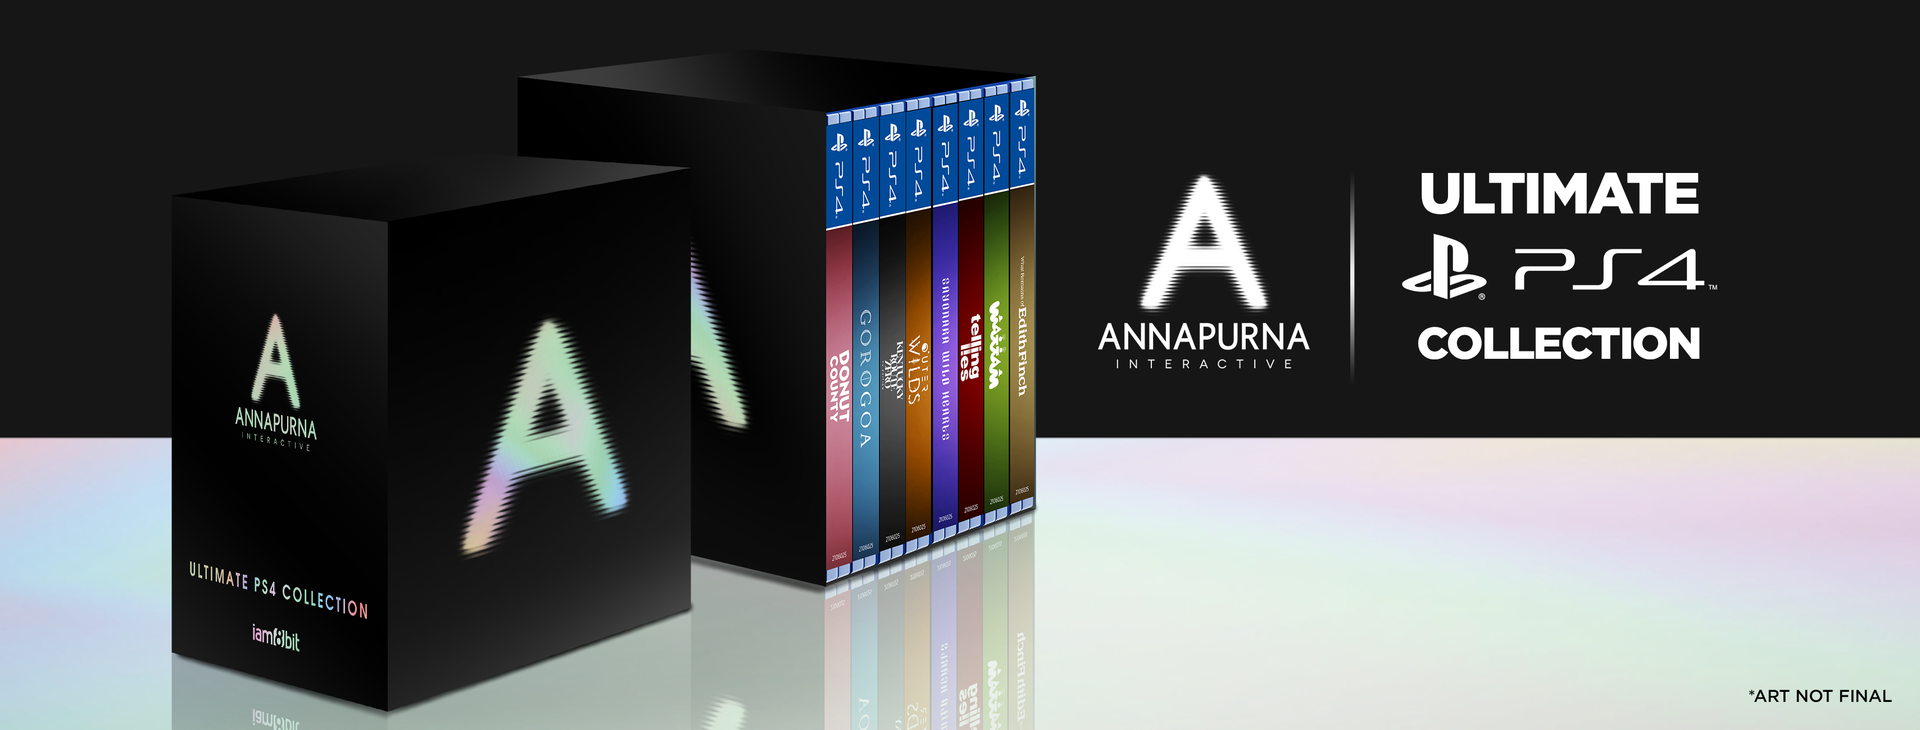 Annapurna Interactive anuncia su Ultimate PS4 Collection